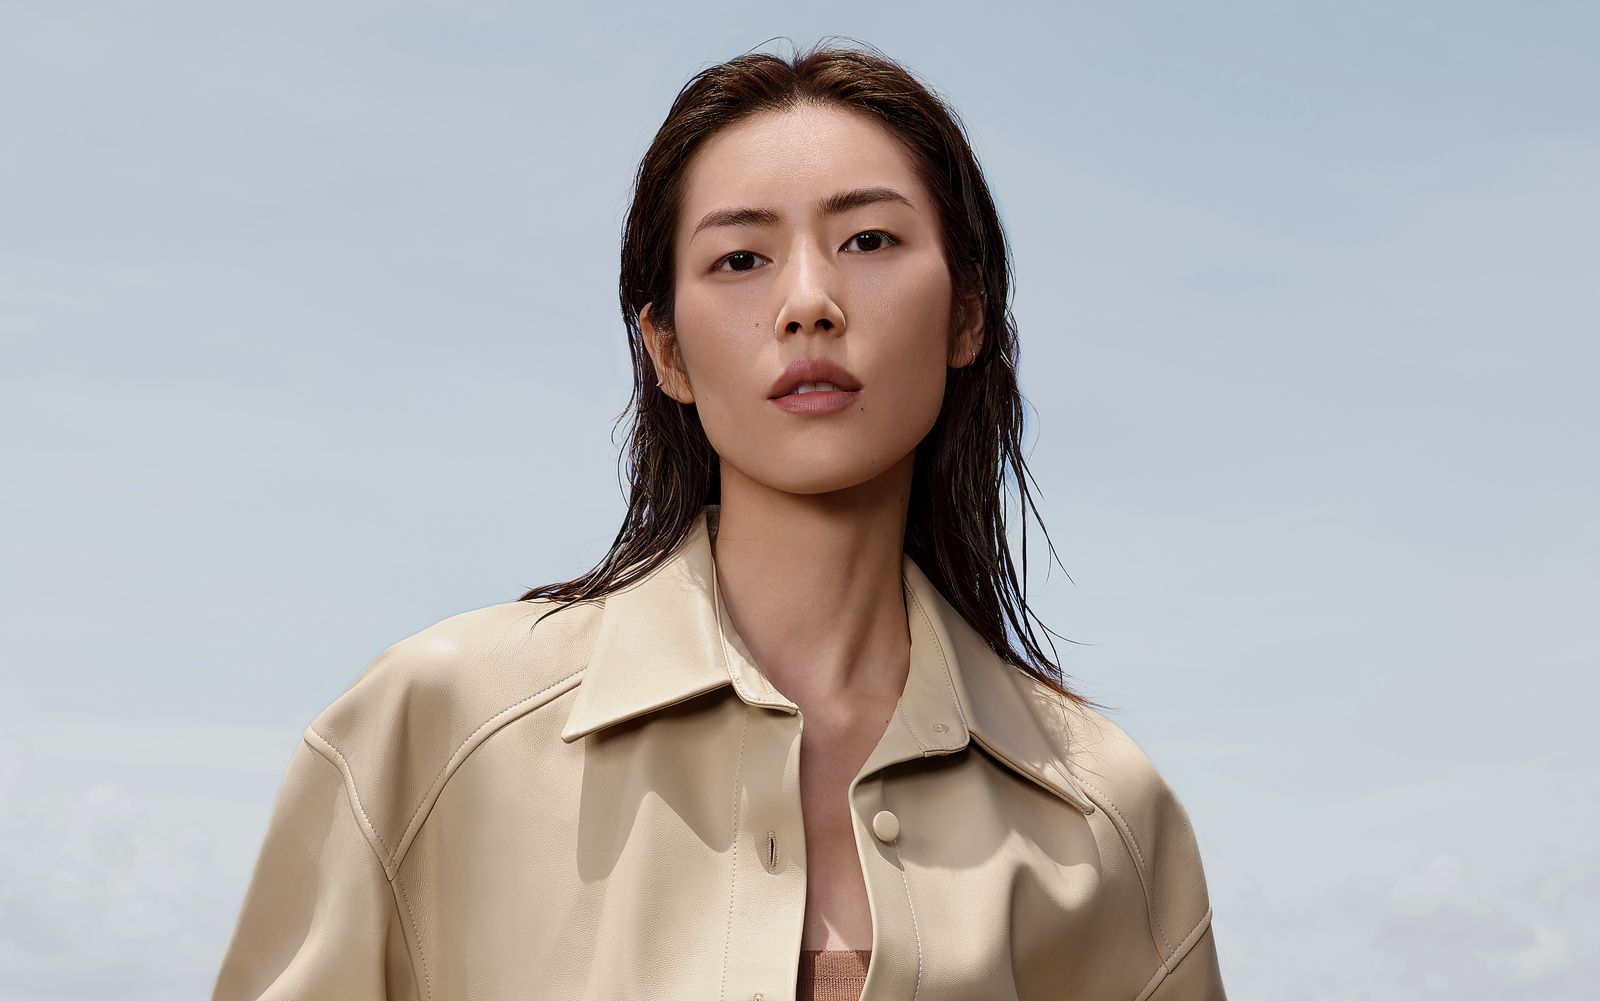 Самая популярная азиатская модель Лю Вэнь стала амбассадором Bvlgari